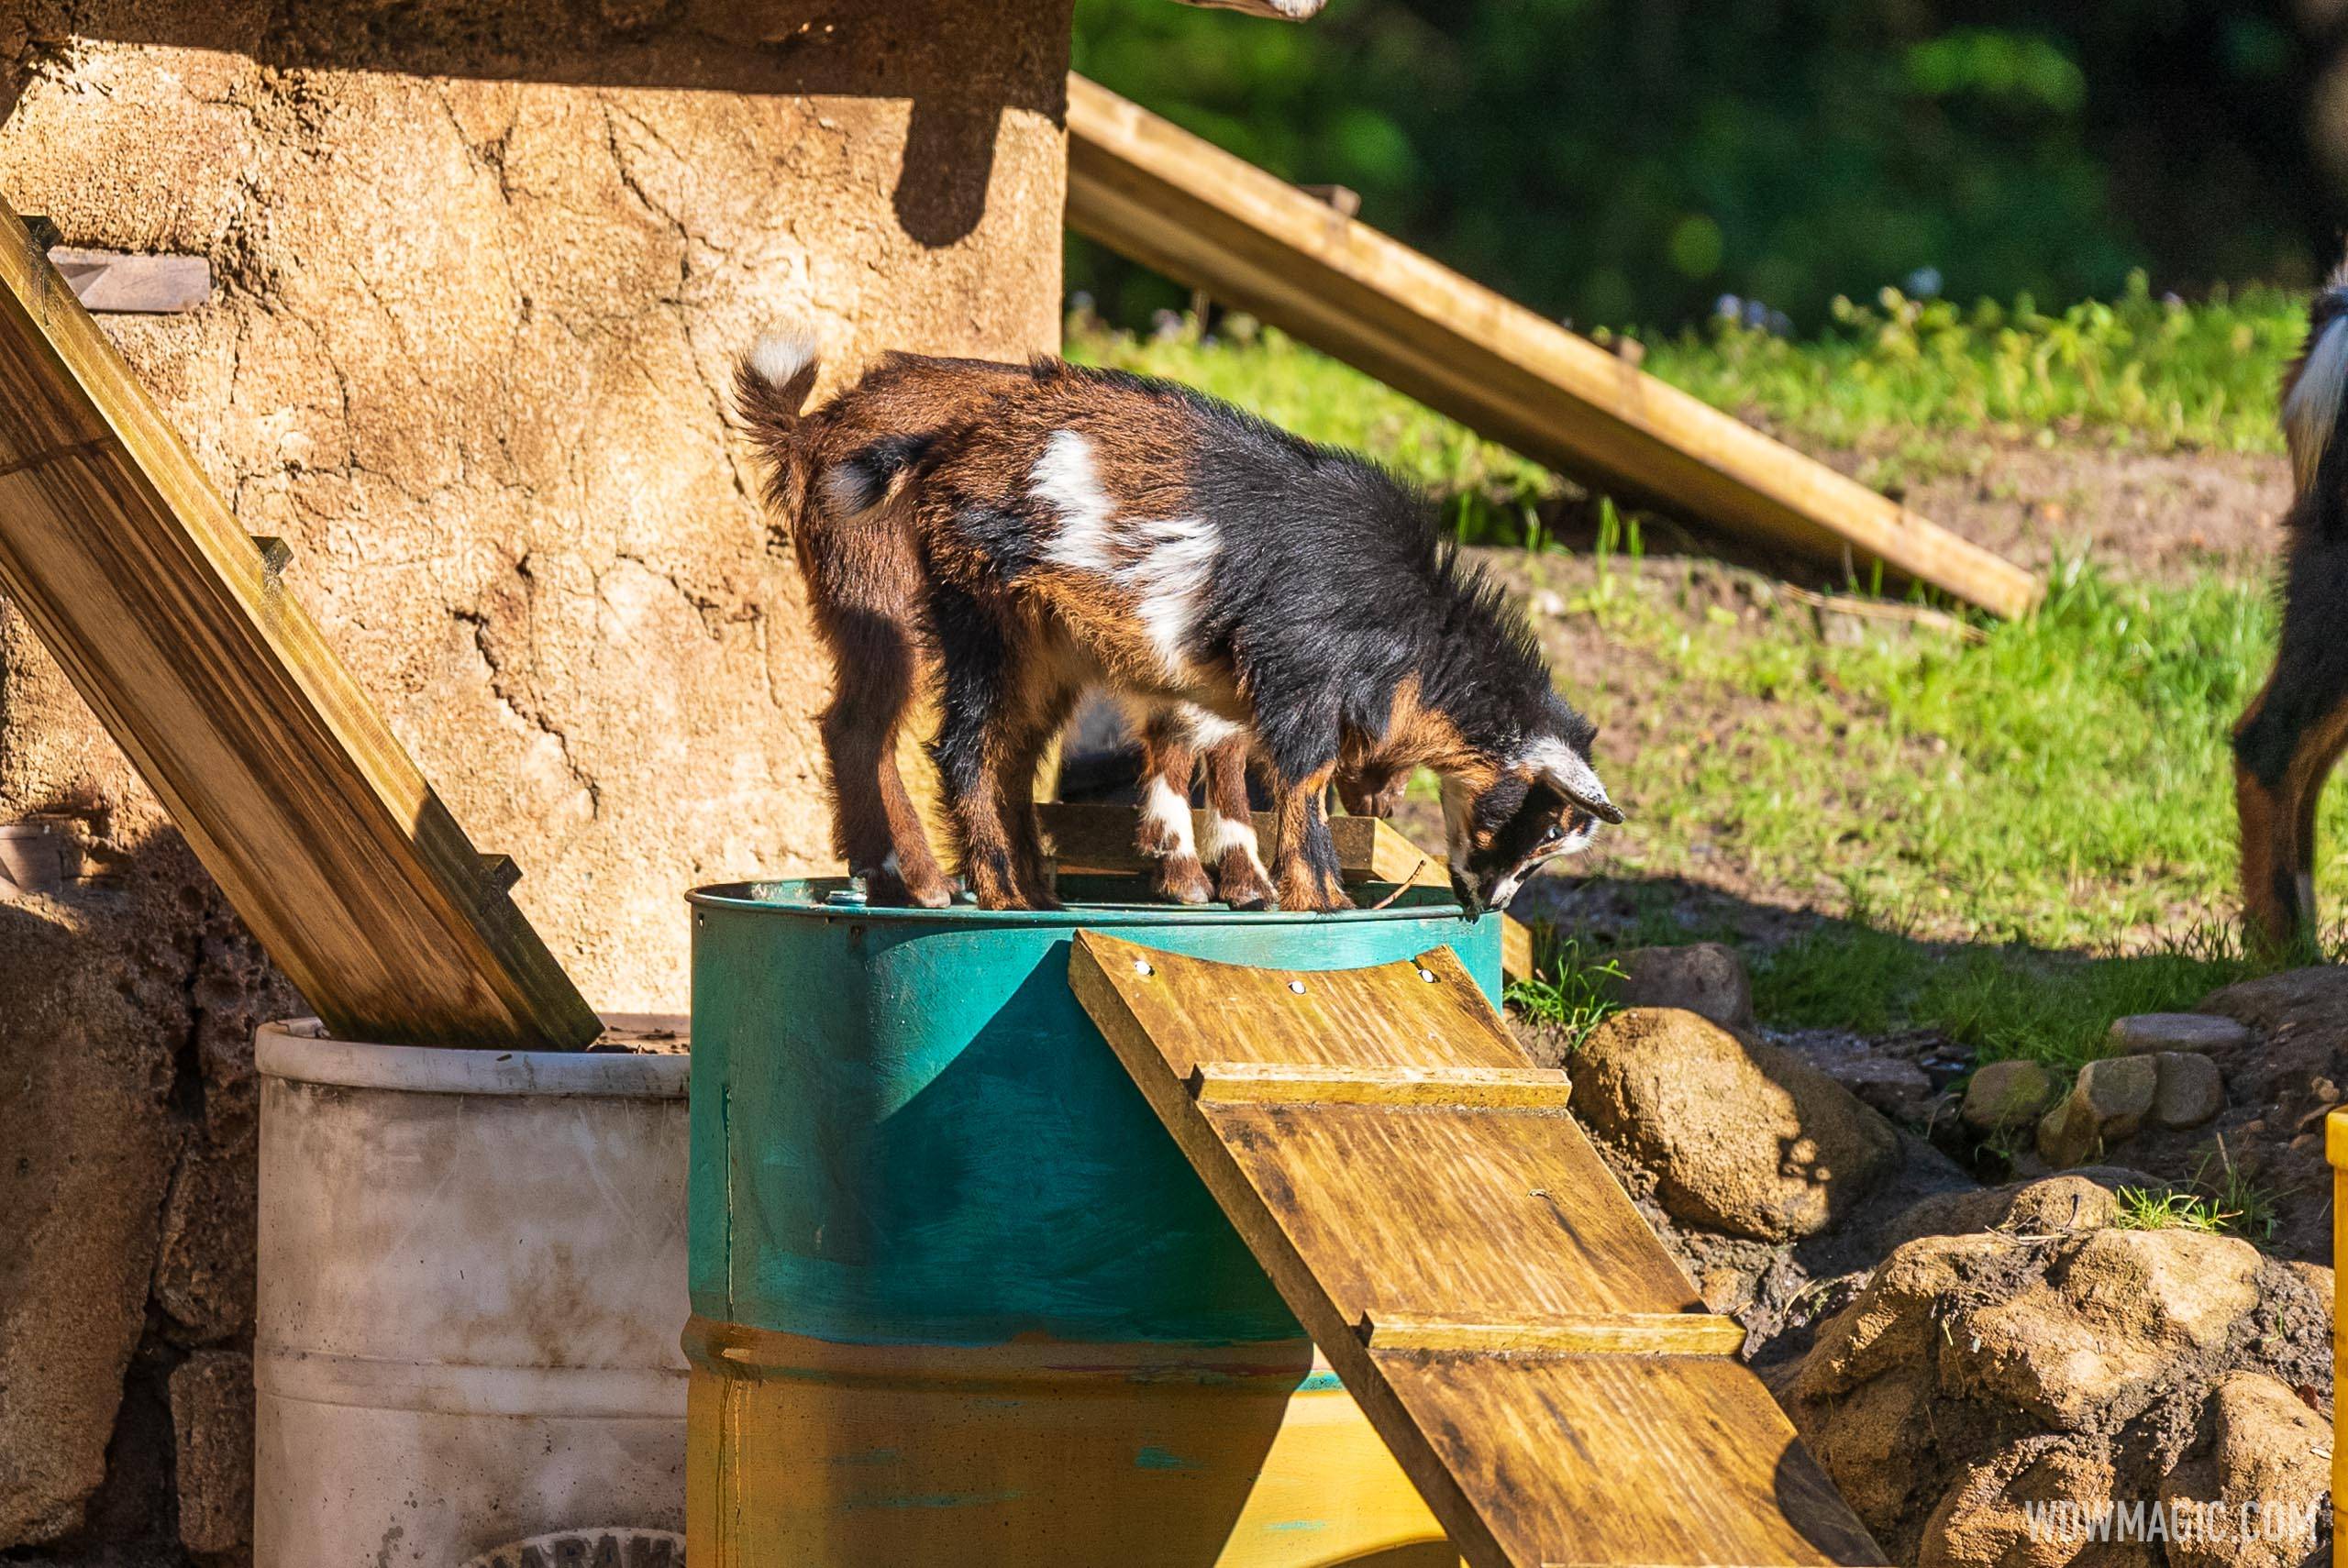 Baby Nigeran dwarf goats